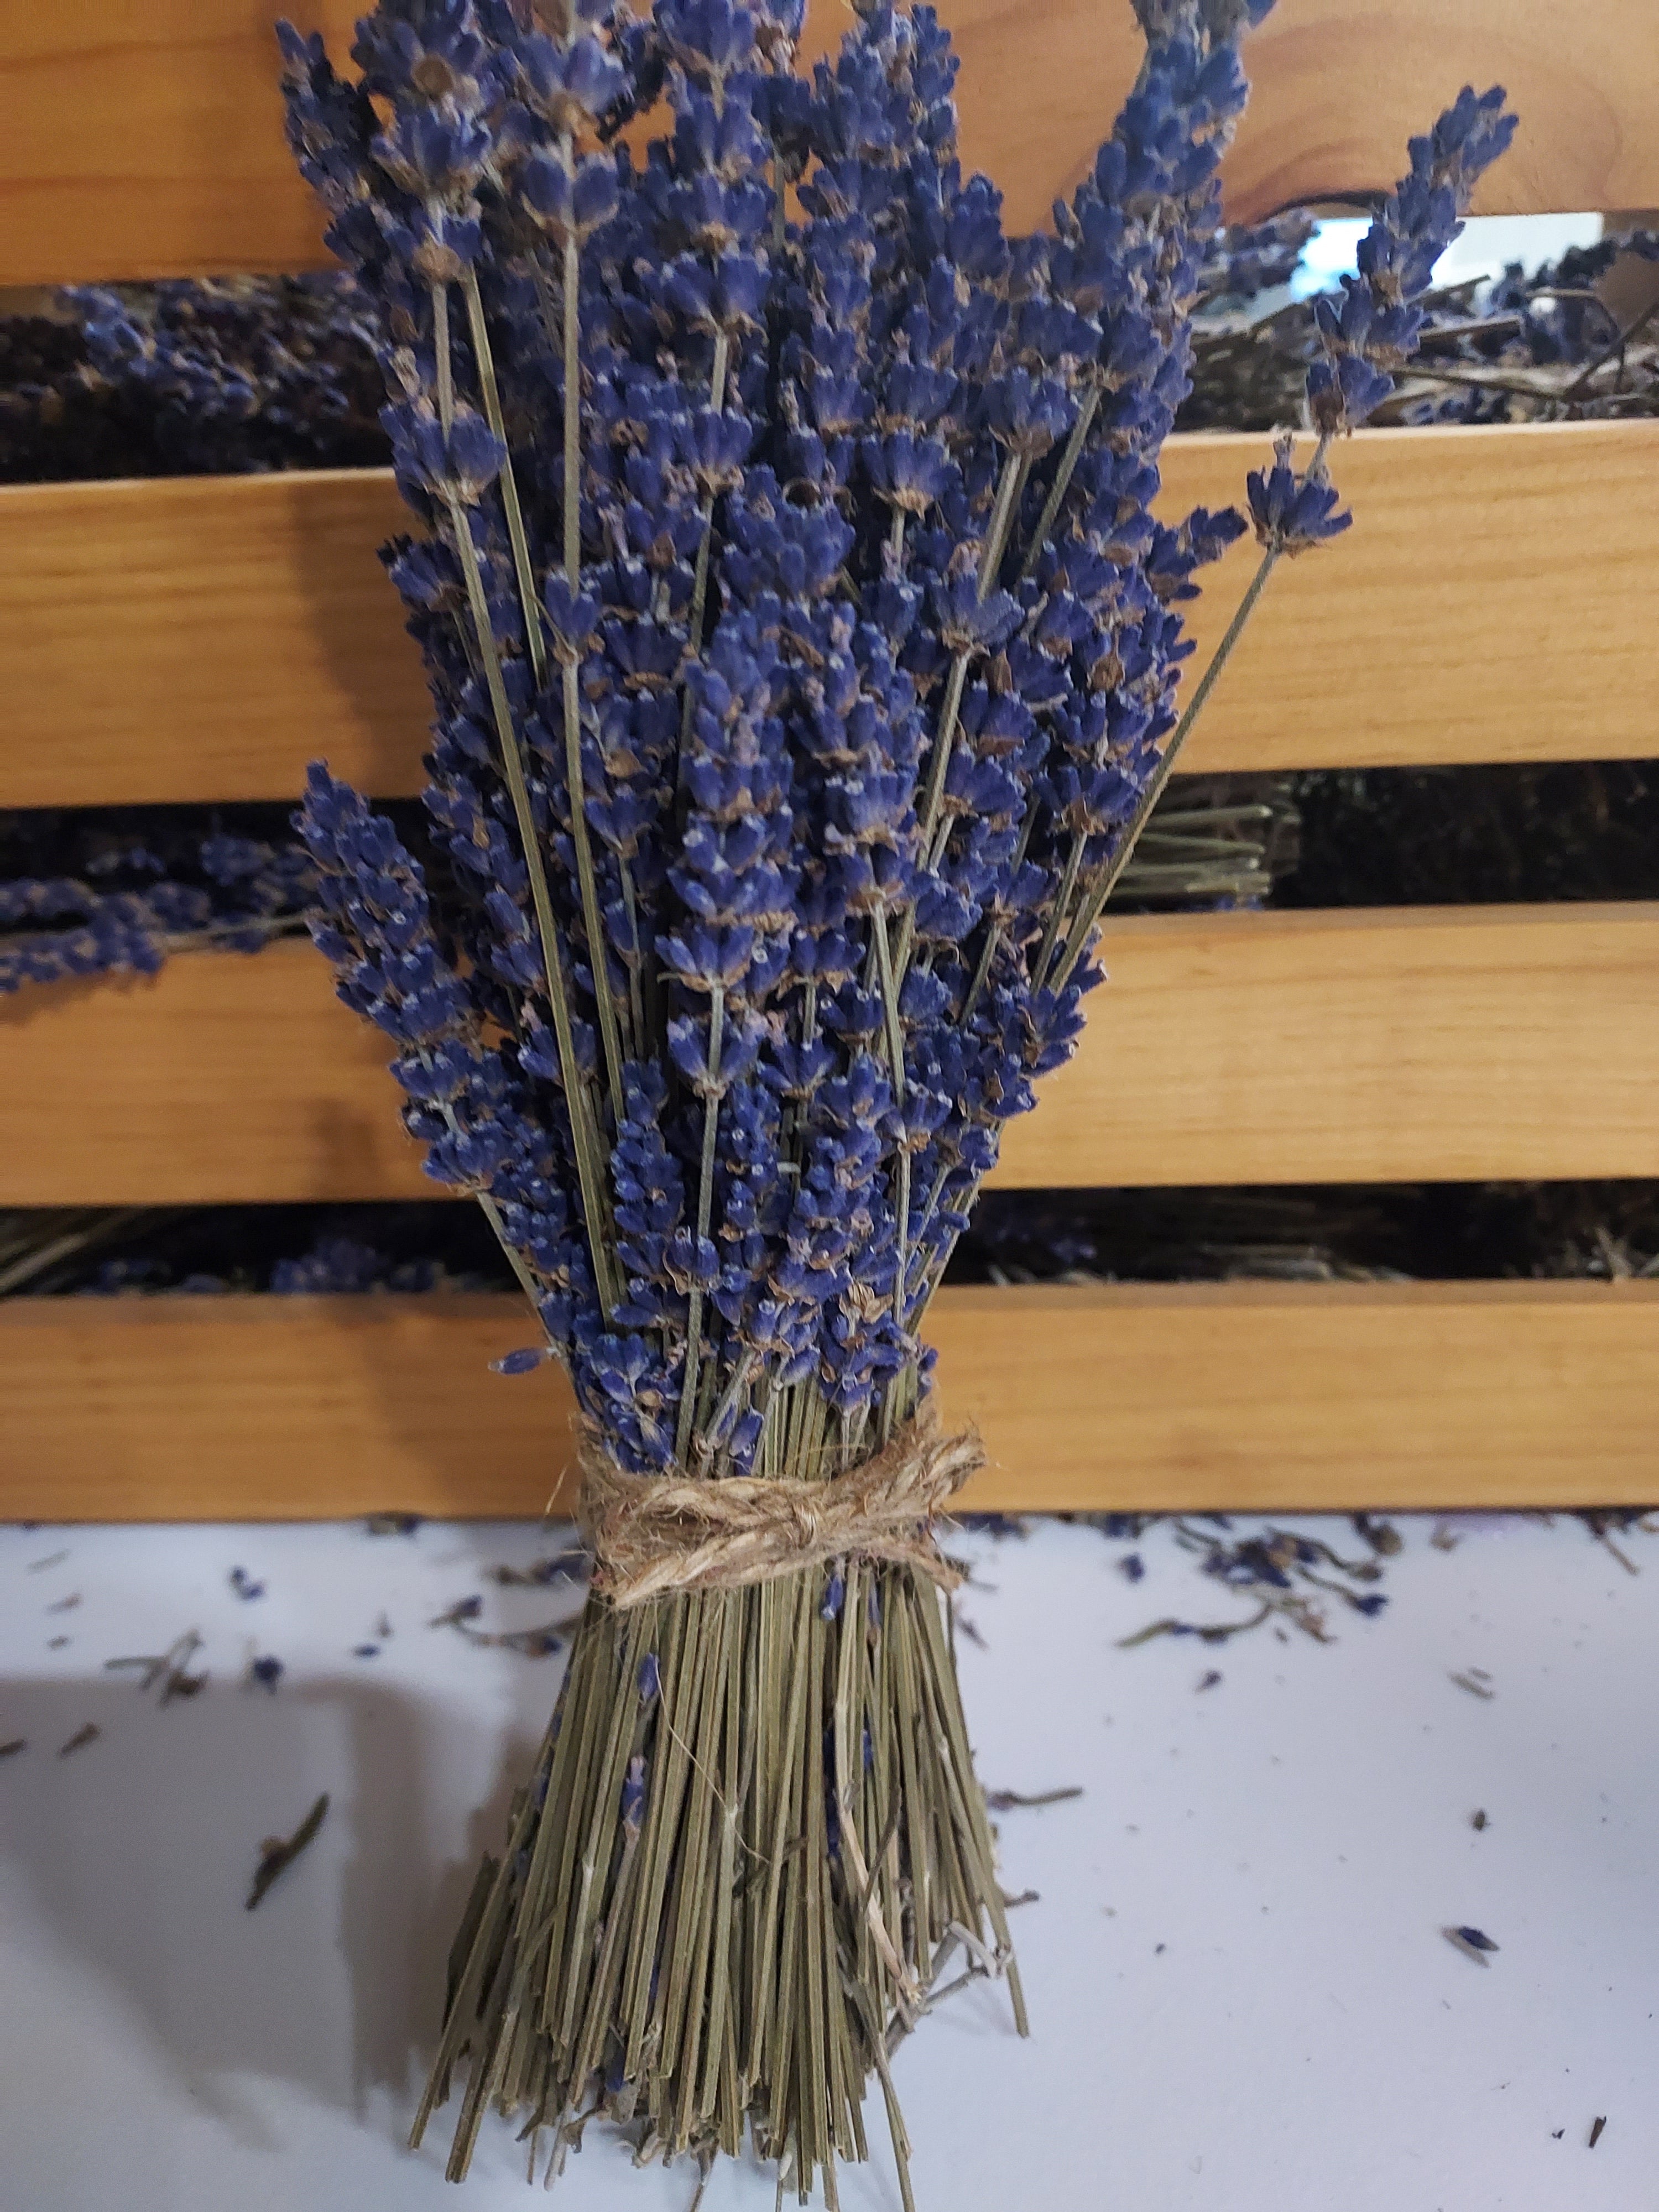 750 STEMS of Dried English Lavender 8-12 Long Bulk Lavender Stems